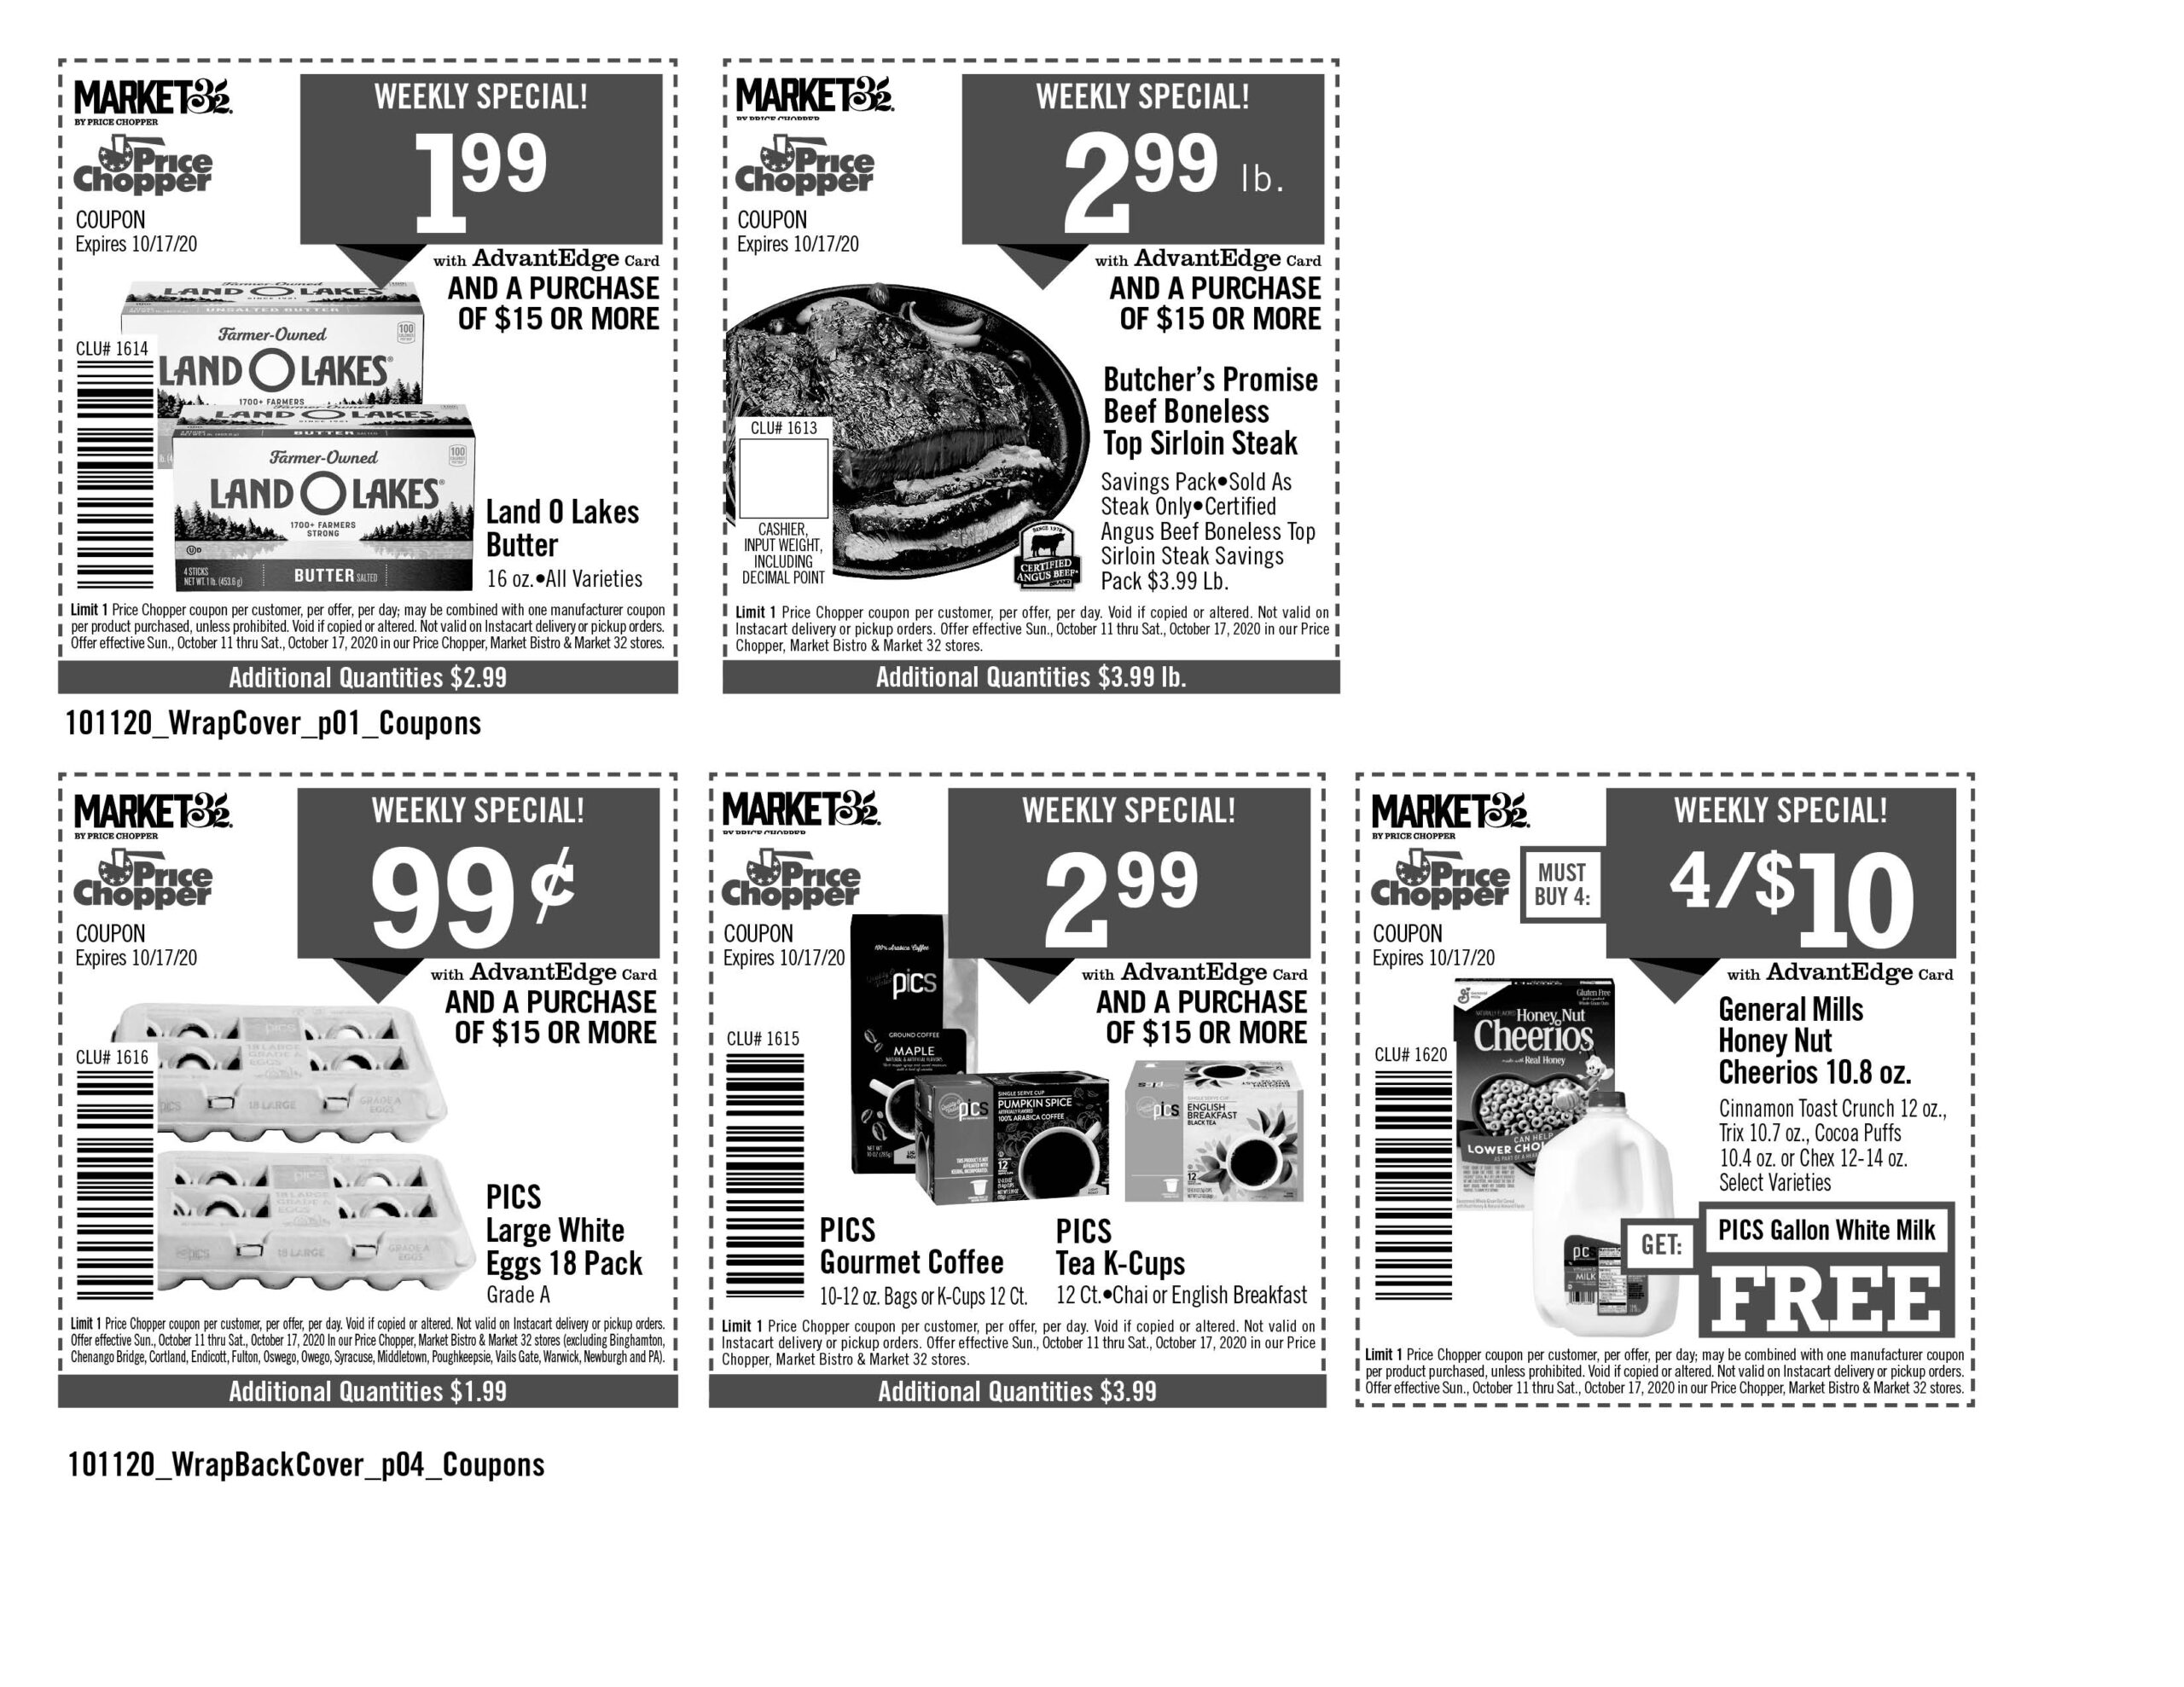 market 32 coupons